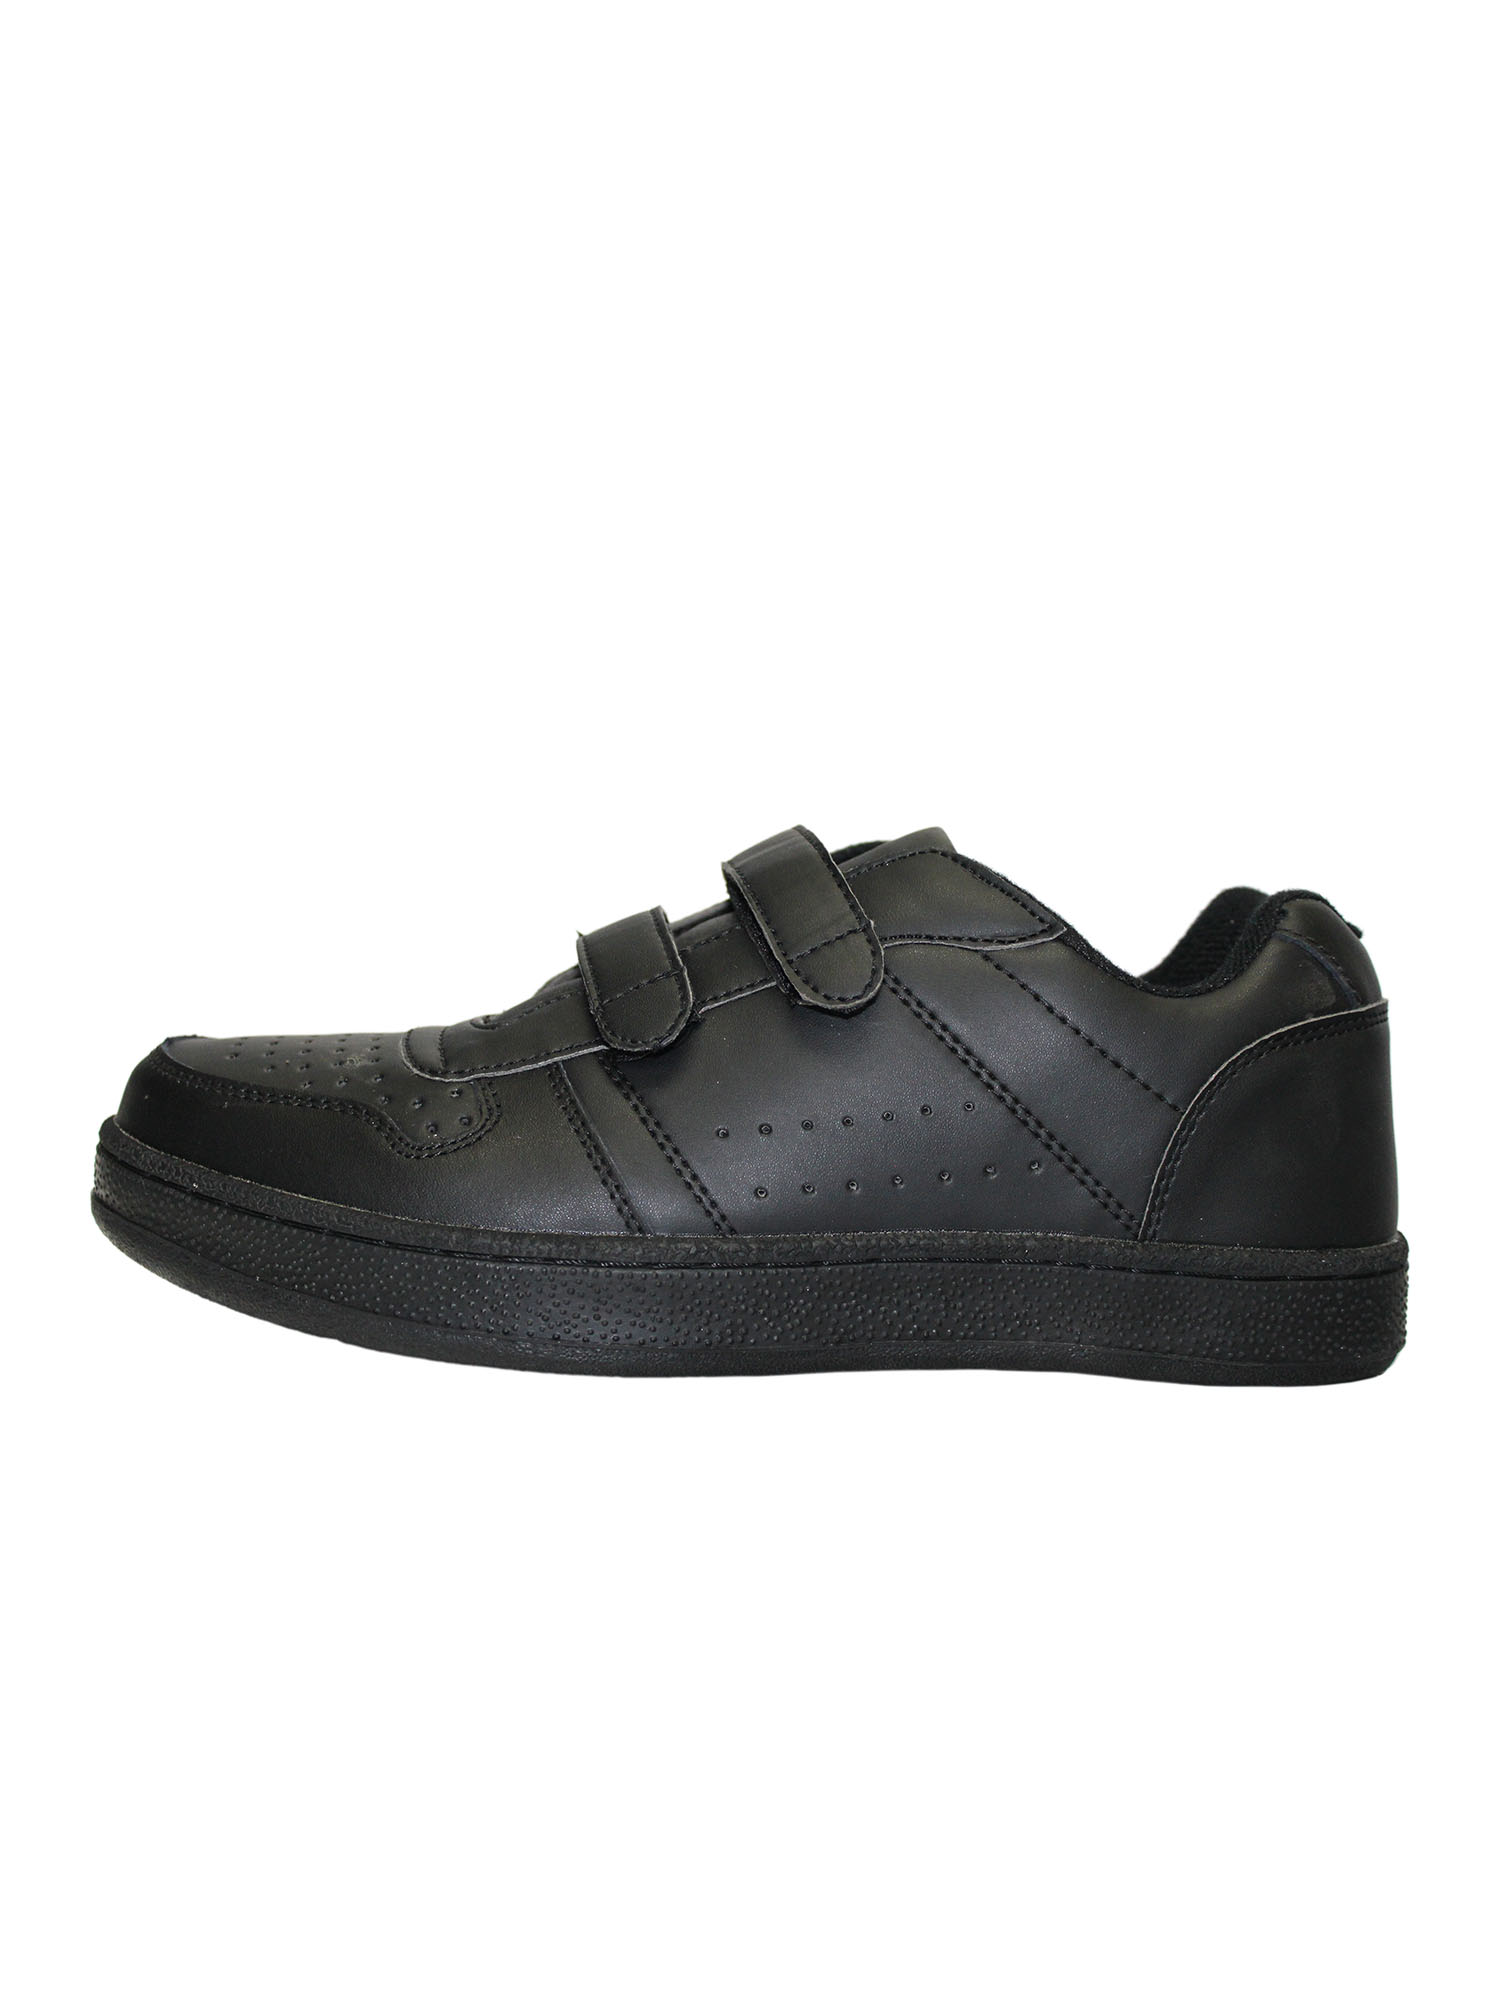 Tanleewa Men's Leather Strap Sneakers Lightweight Hook and Loop Walking Shoe Size 4 Adult Male - image 2 of 4